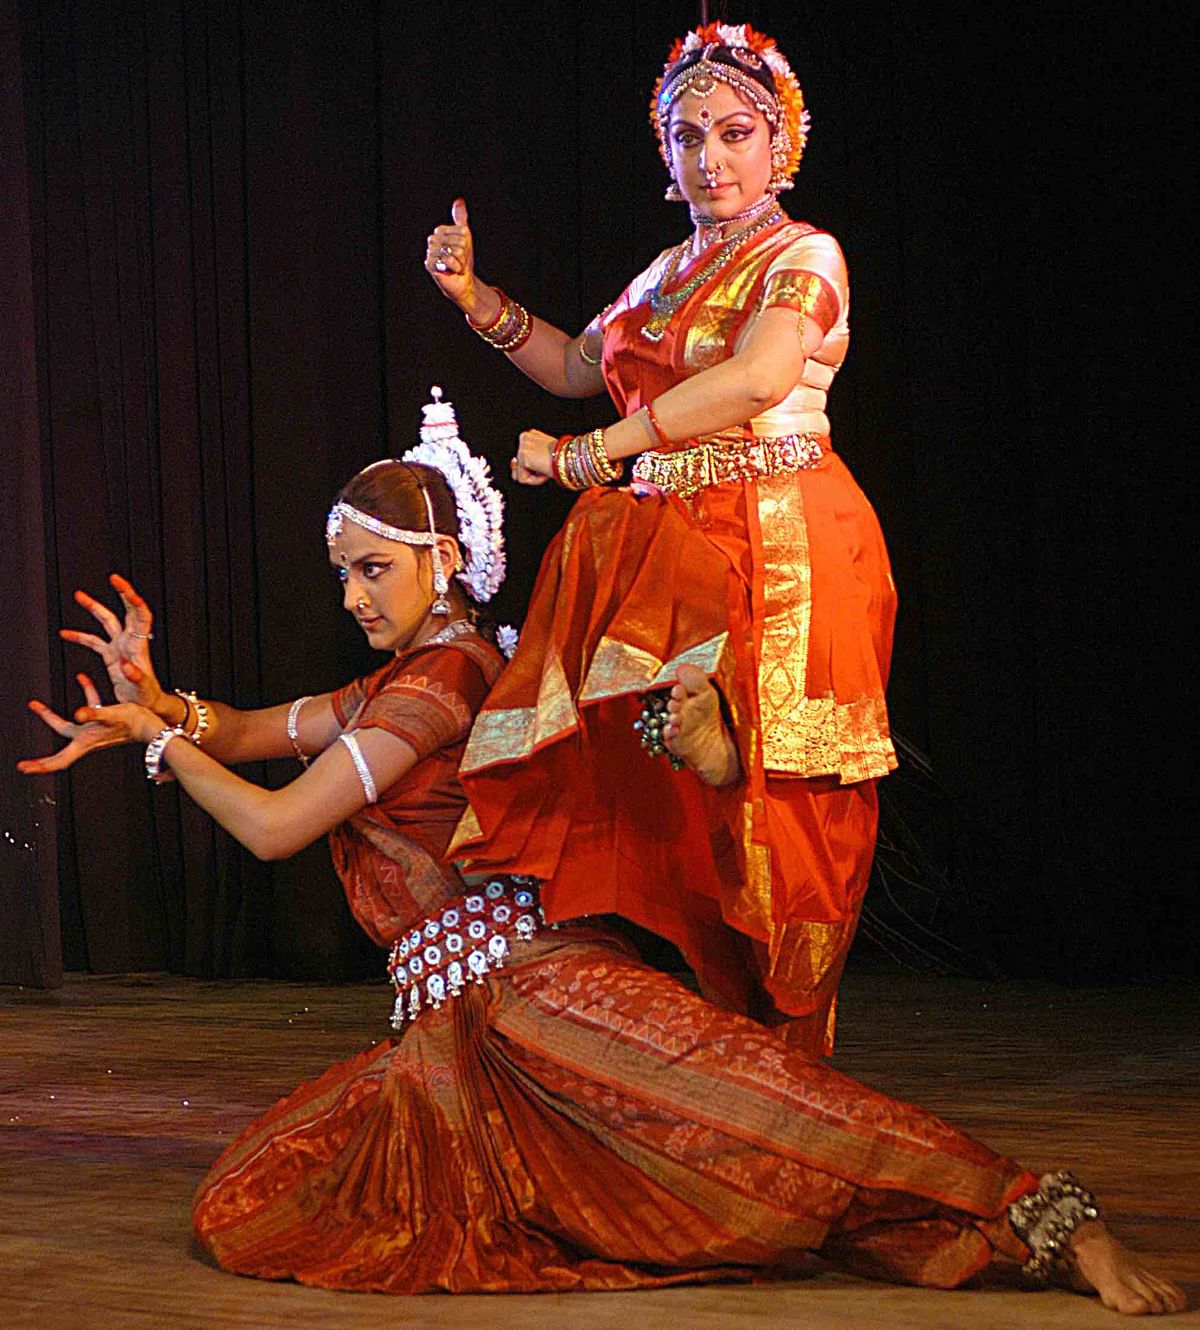 Hema Malini speaks to Bhawana Somaaya about her real passion in life - dancing